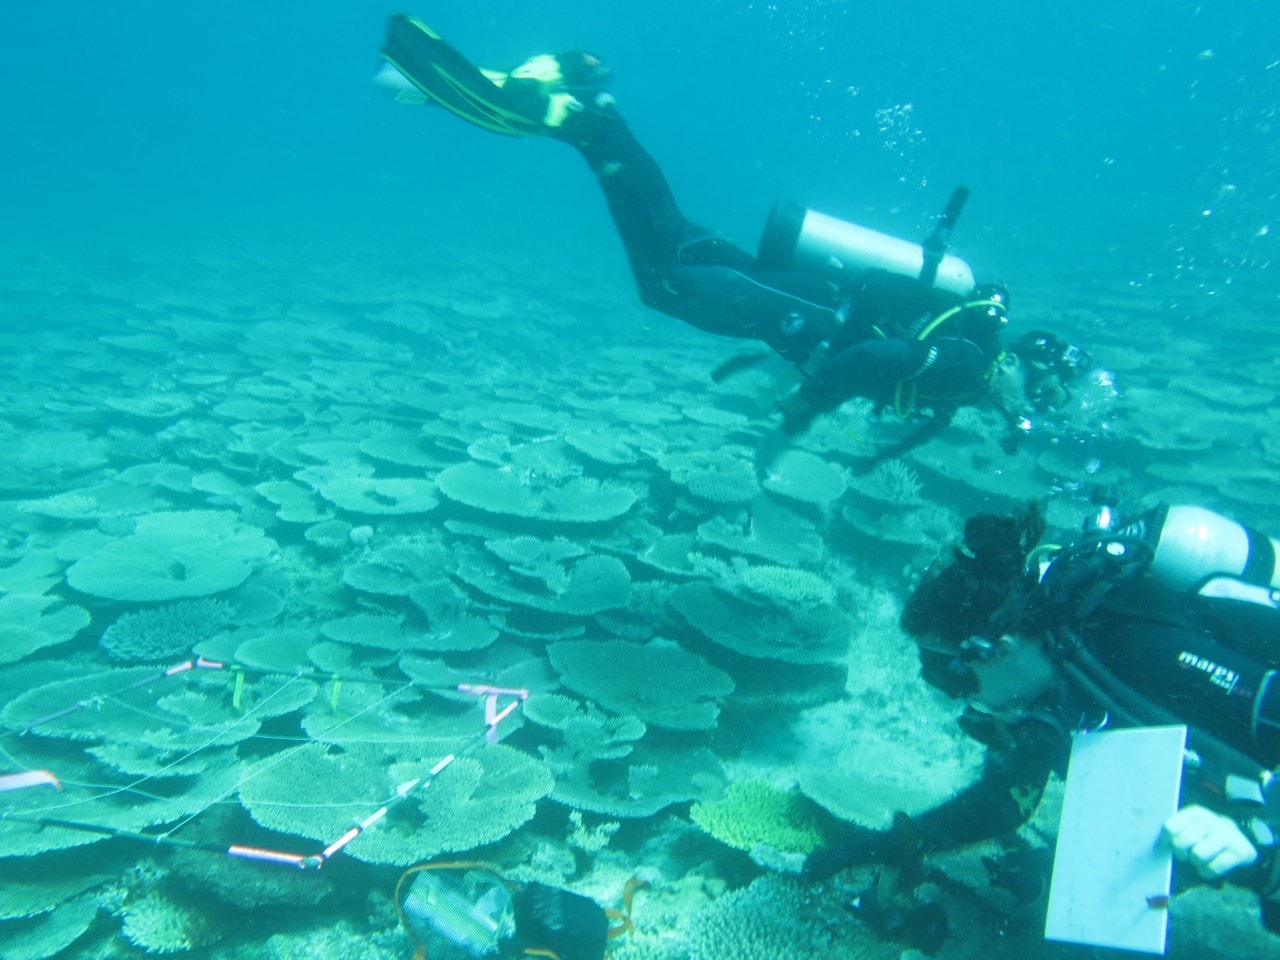 University of Sydney researchers underwater in the Great Barrier Reef. 